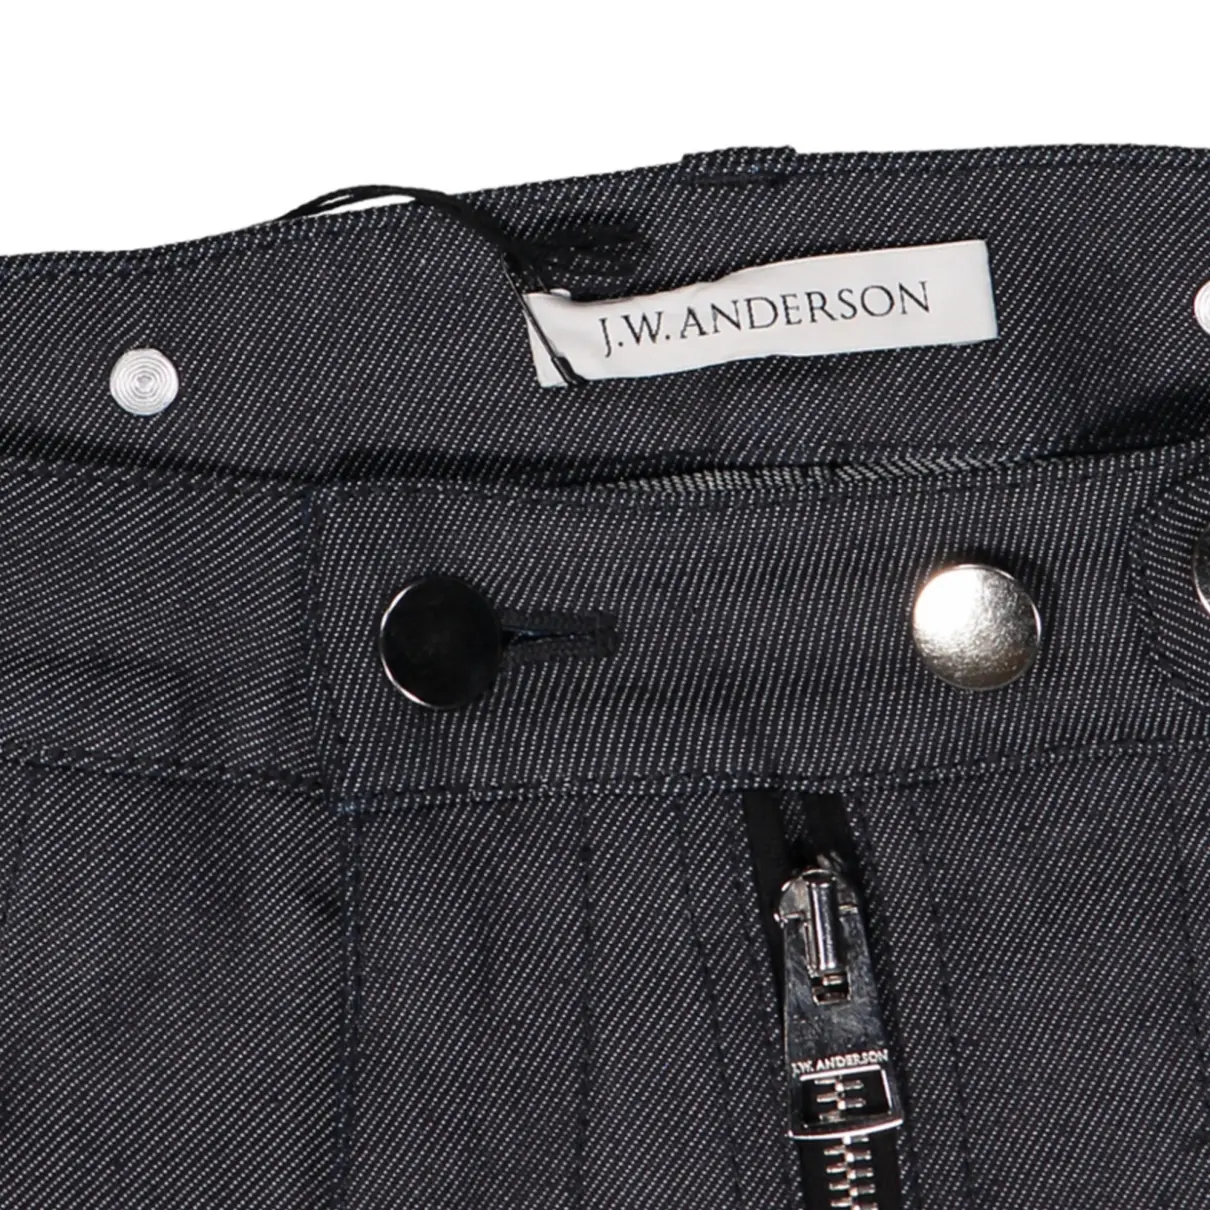 Buy JW Anderson Straight pants online